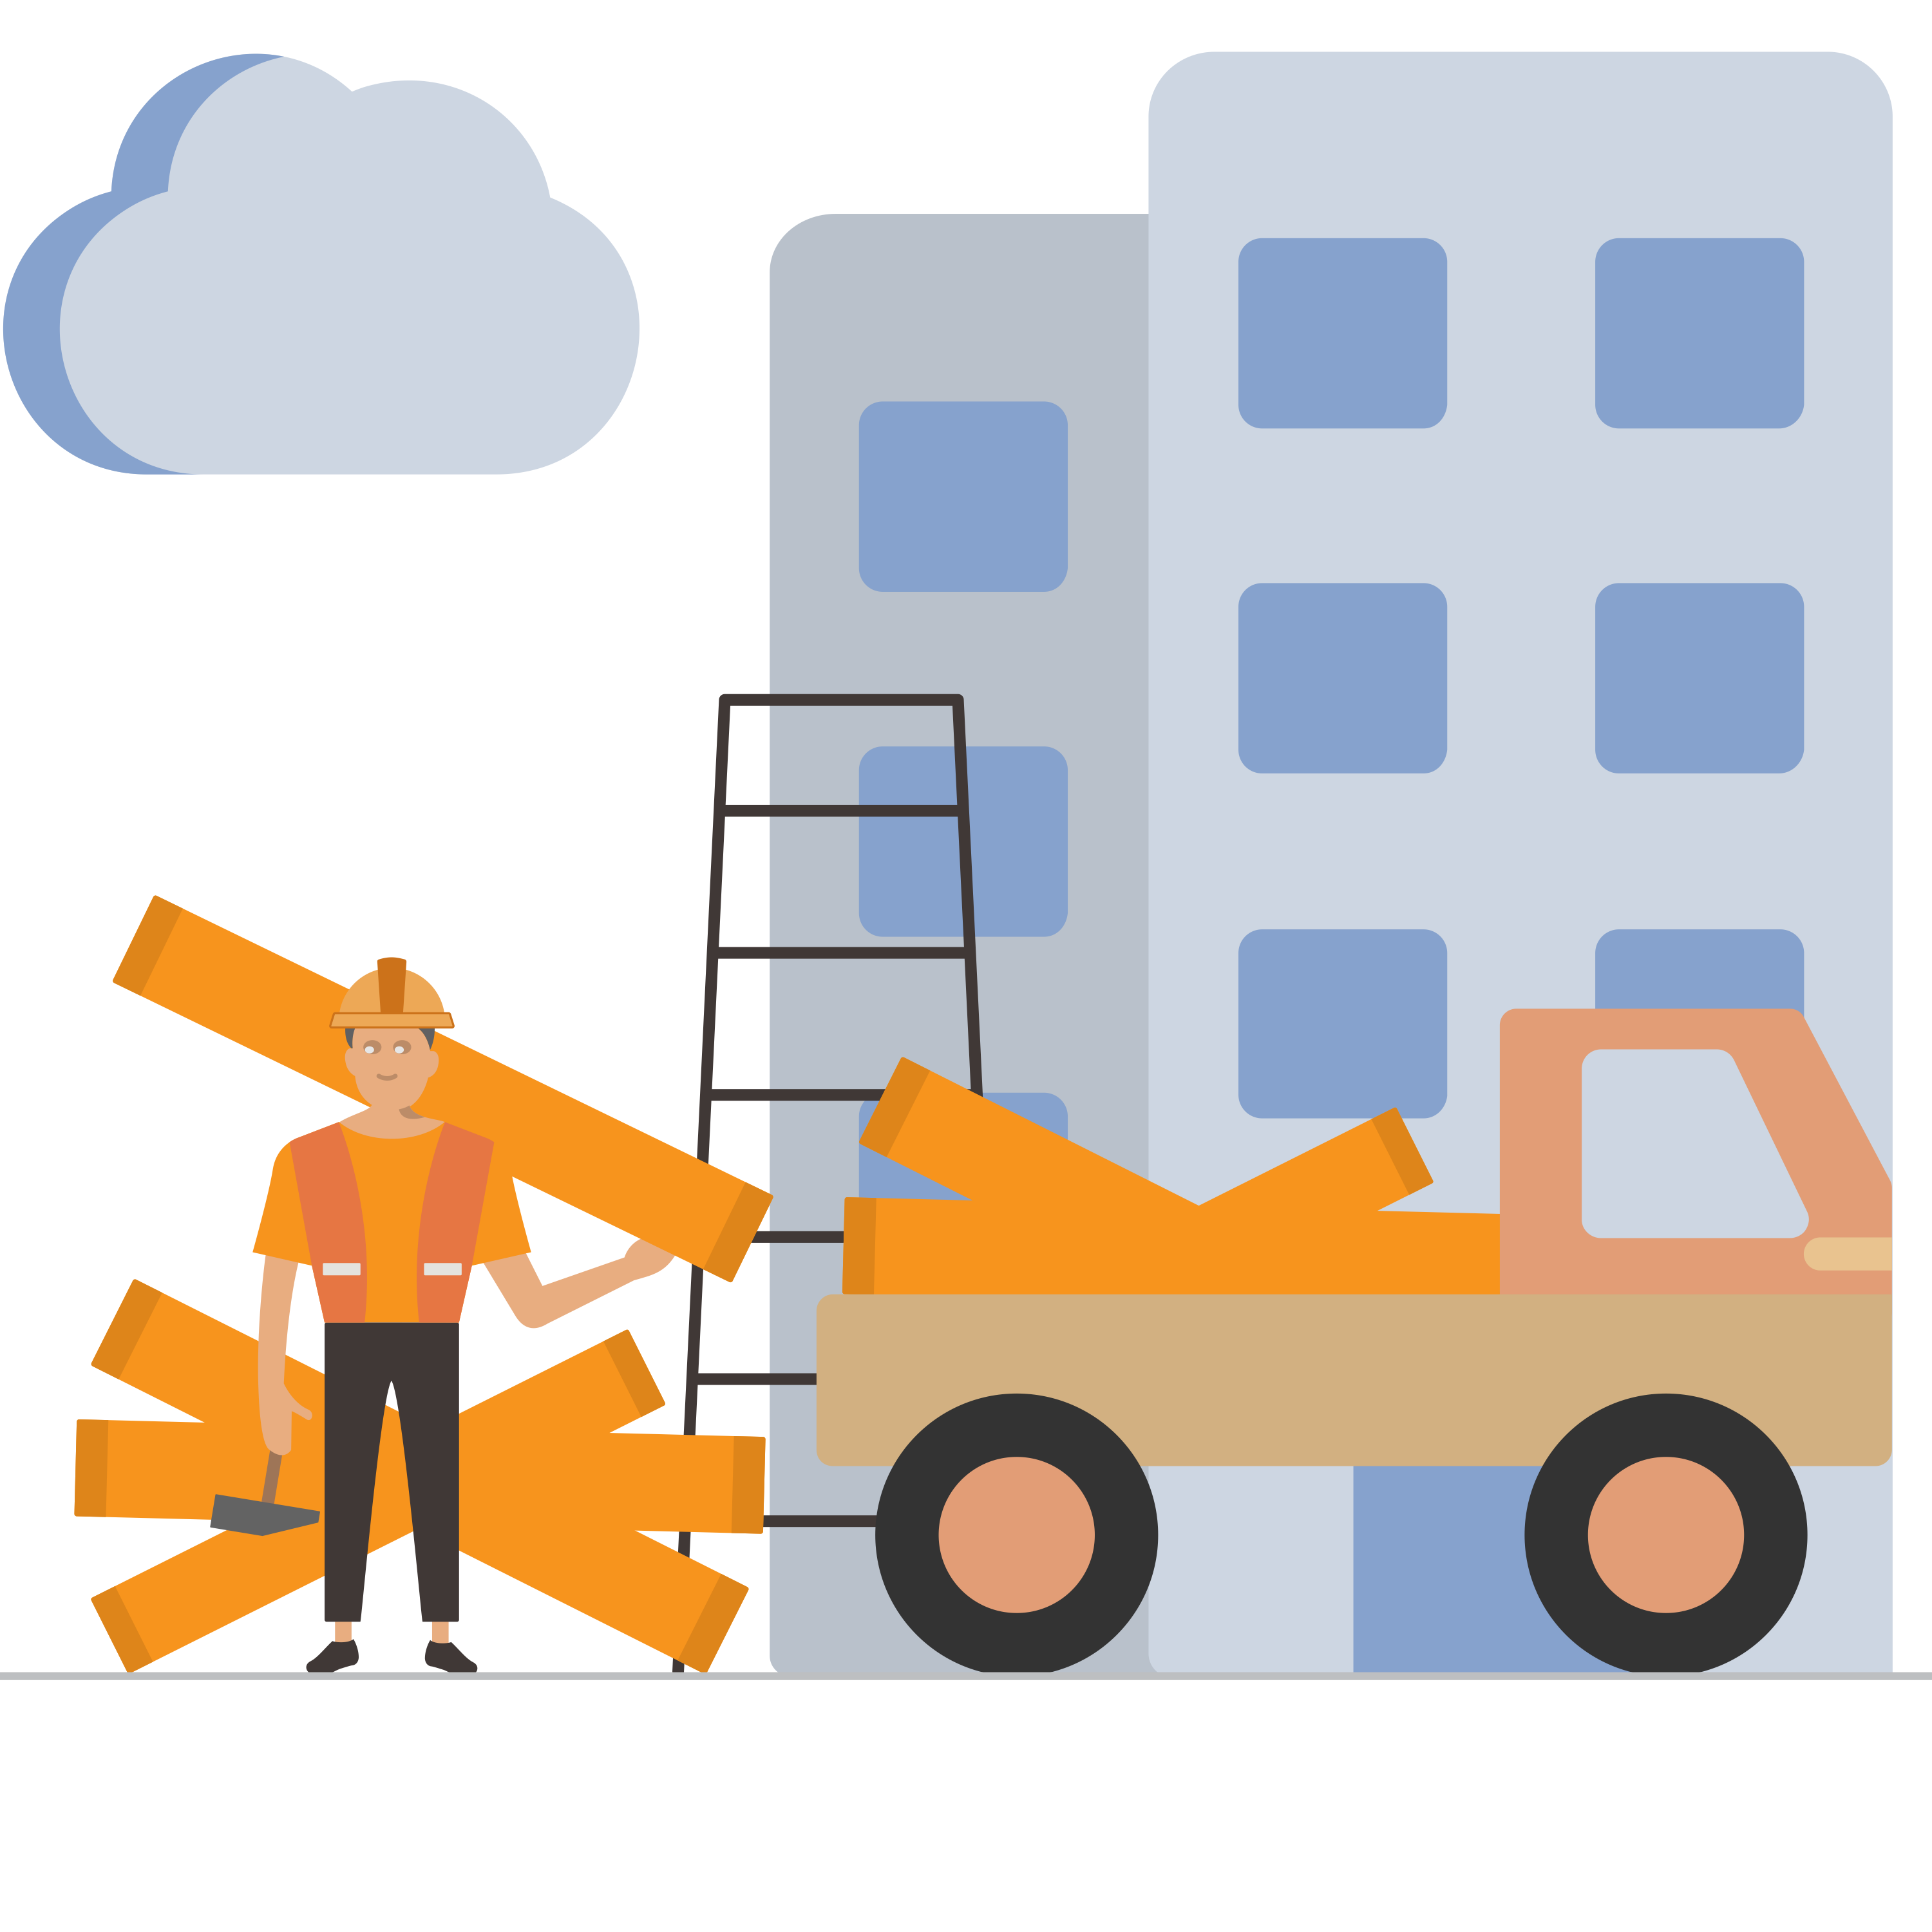 waste-rubbish-trash-heavy-illustration-constructionworker-constructionworkerholdingladder-truck-constructiontruck-illustration